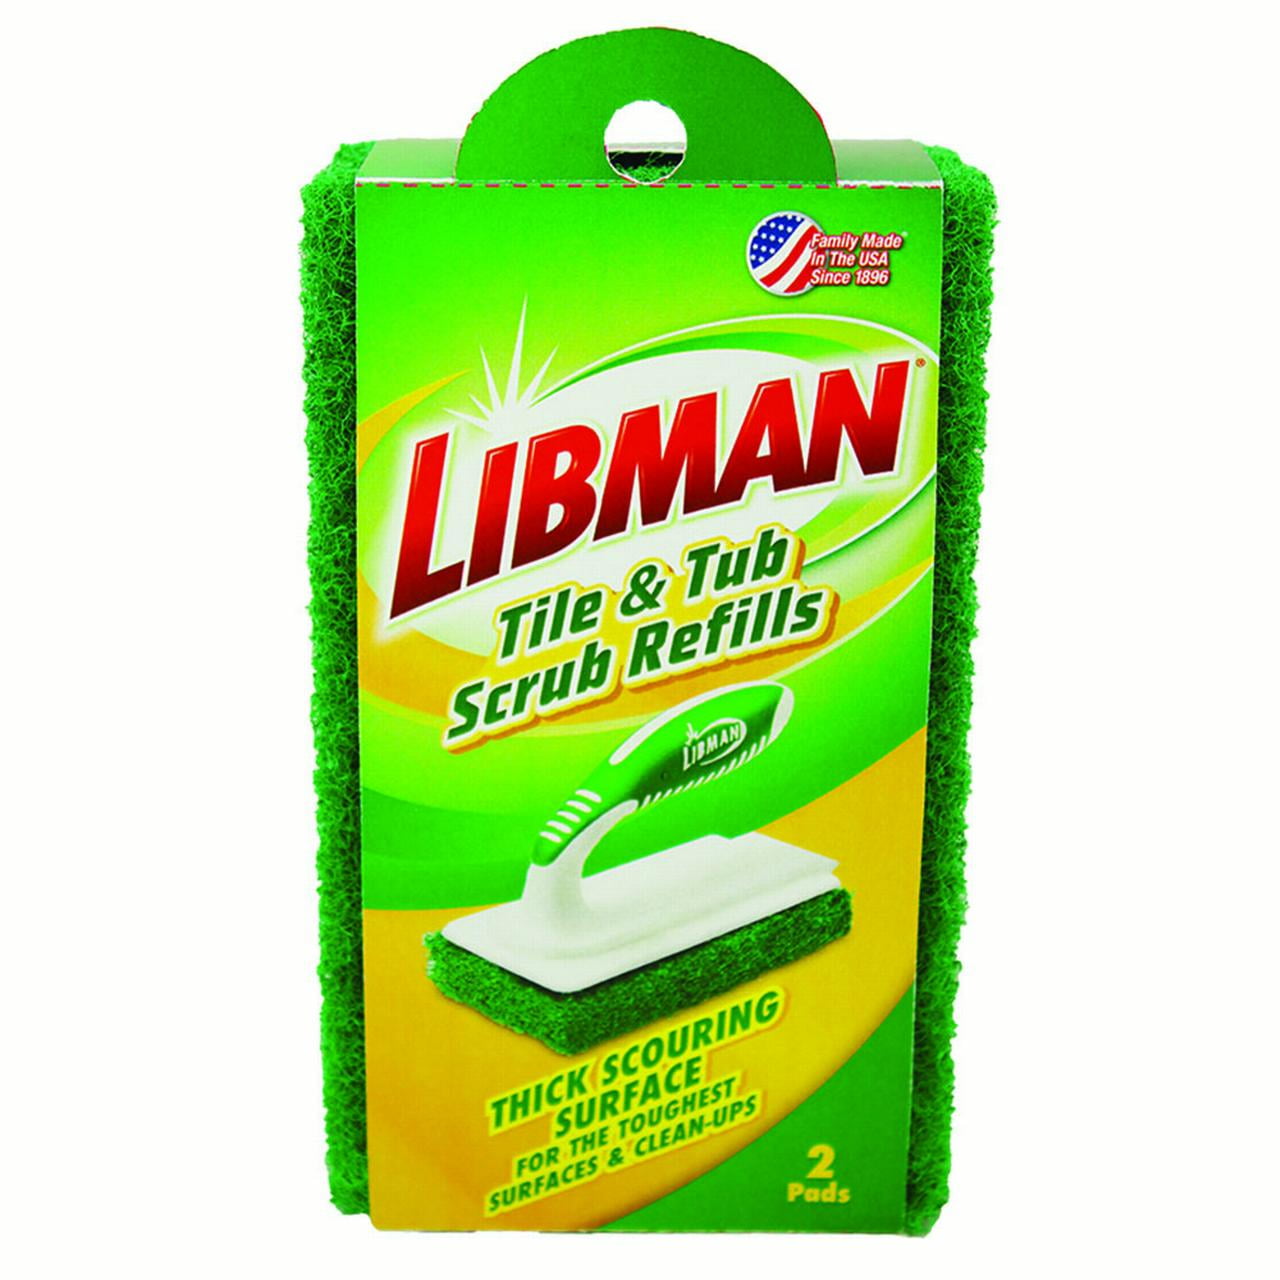 Libman Tile & Tub Scrub Brush, 6X3, Green, 6 Scrubs (Libman 1161)